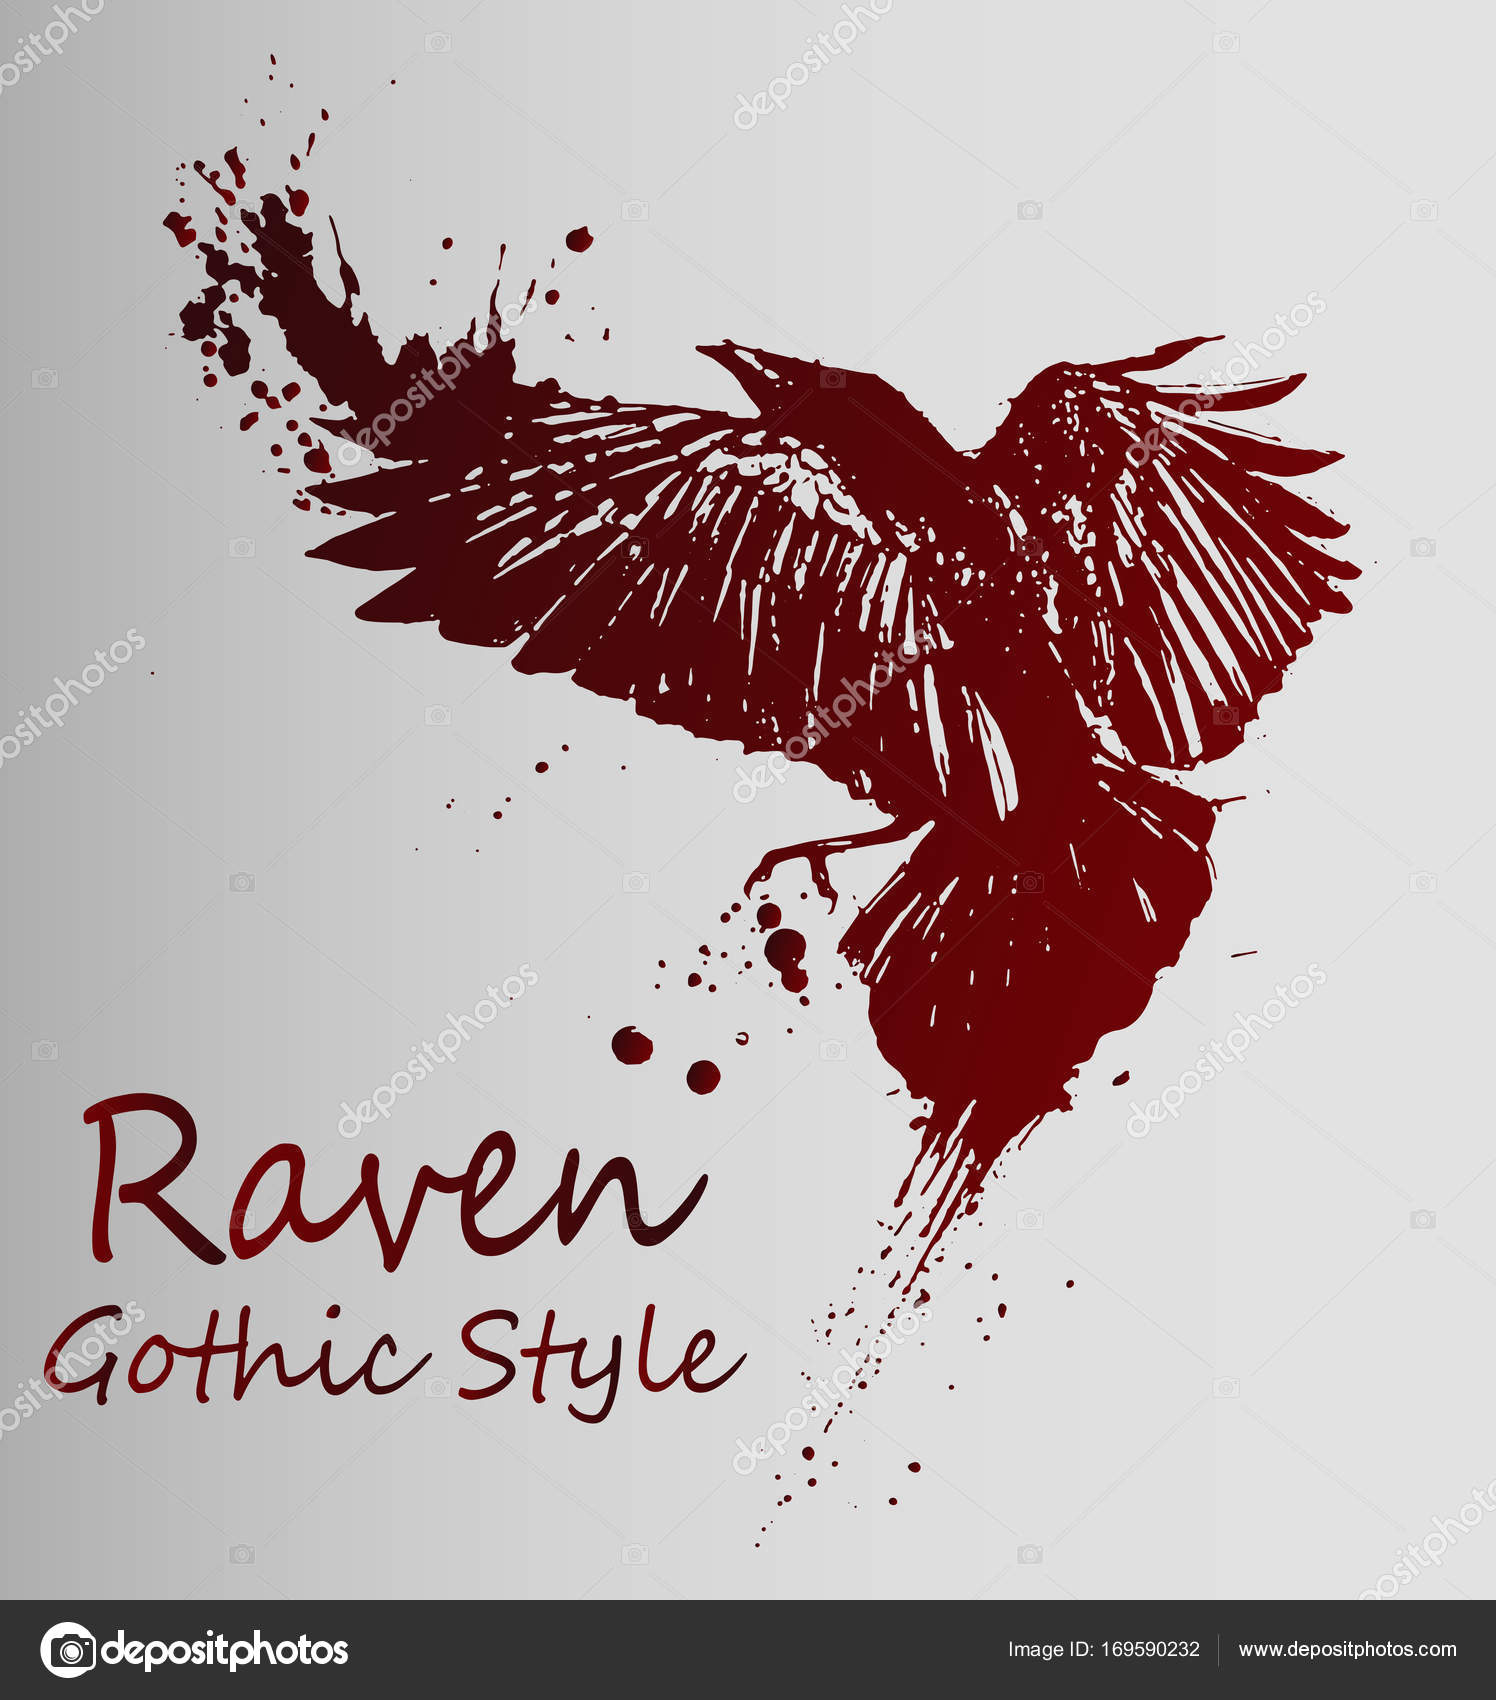 Crows tattoo Vector Art Stock Images | Depositphotos